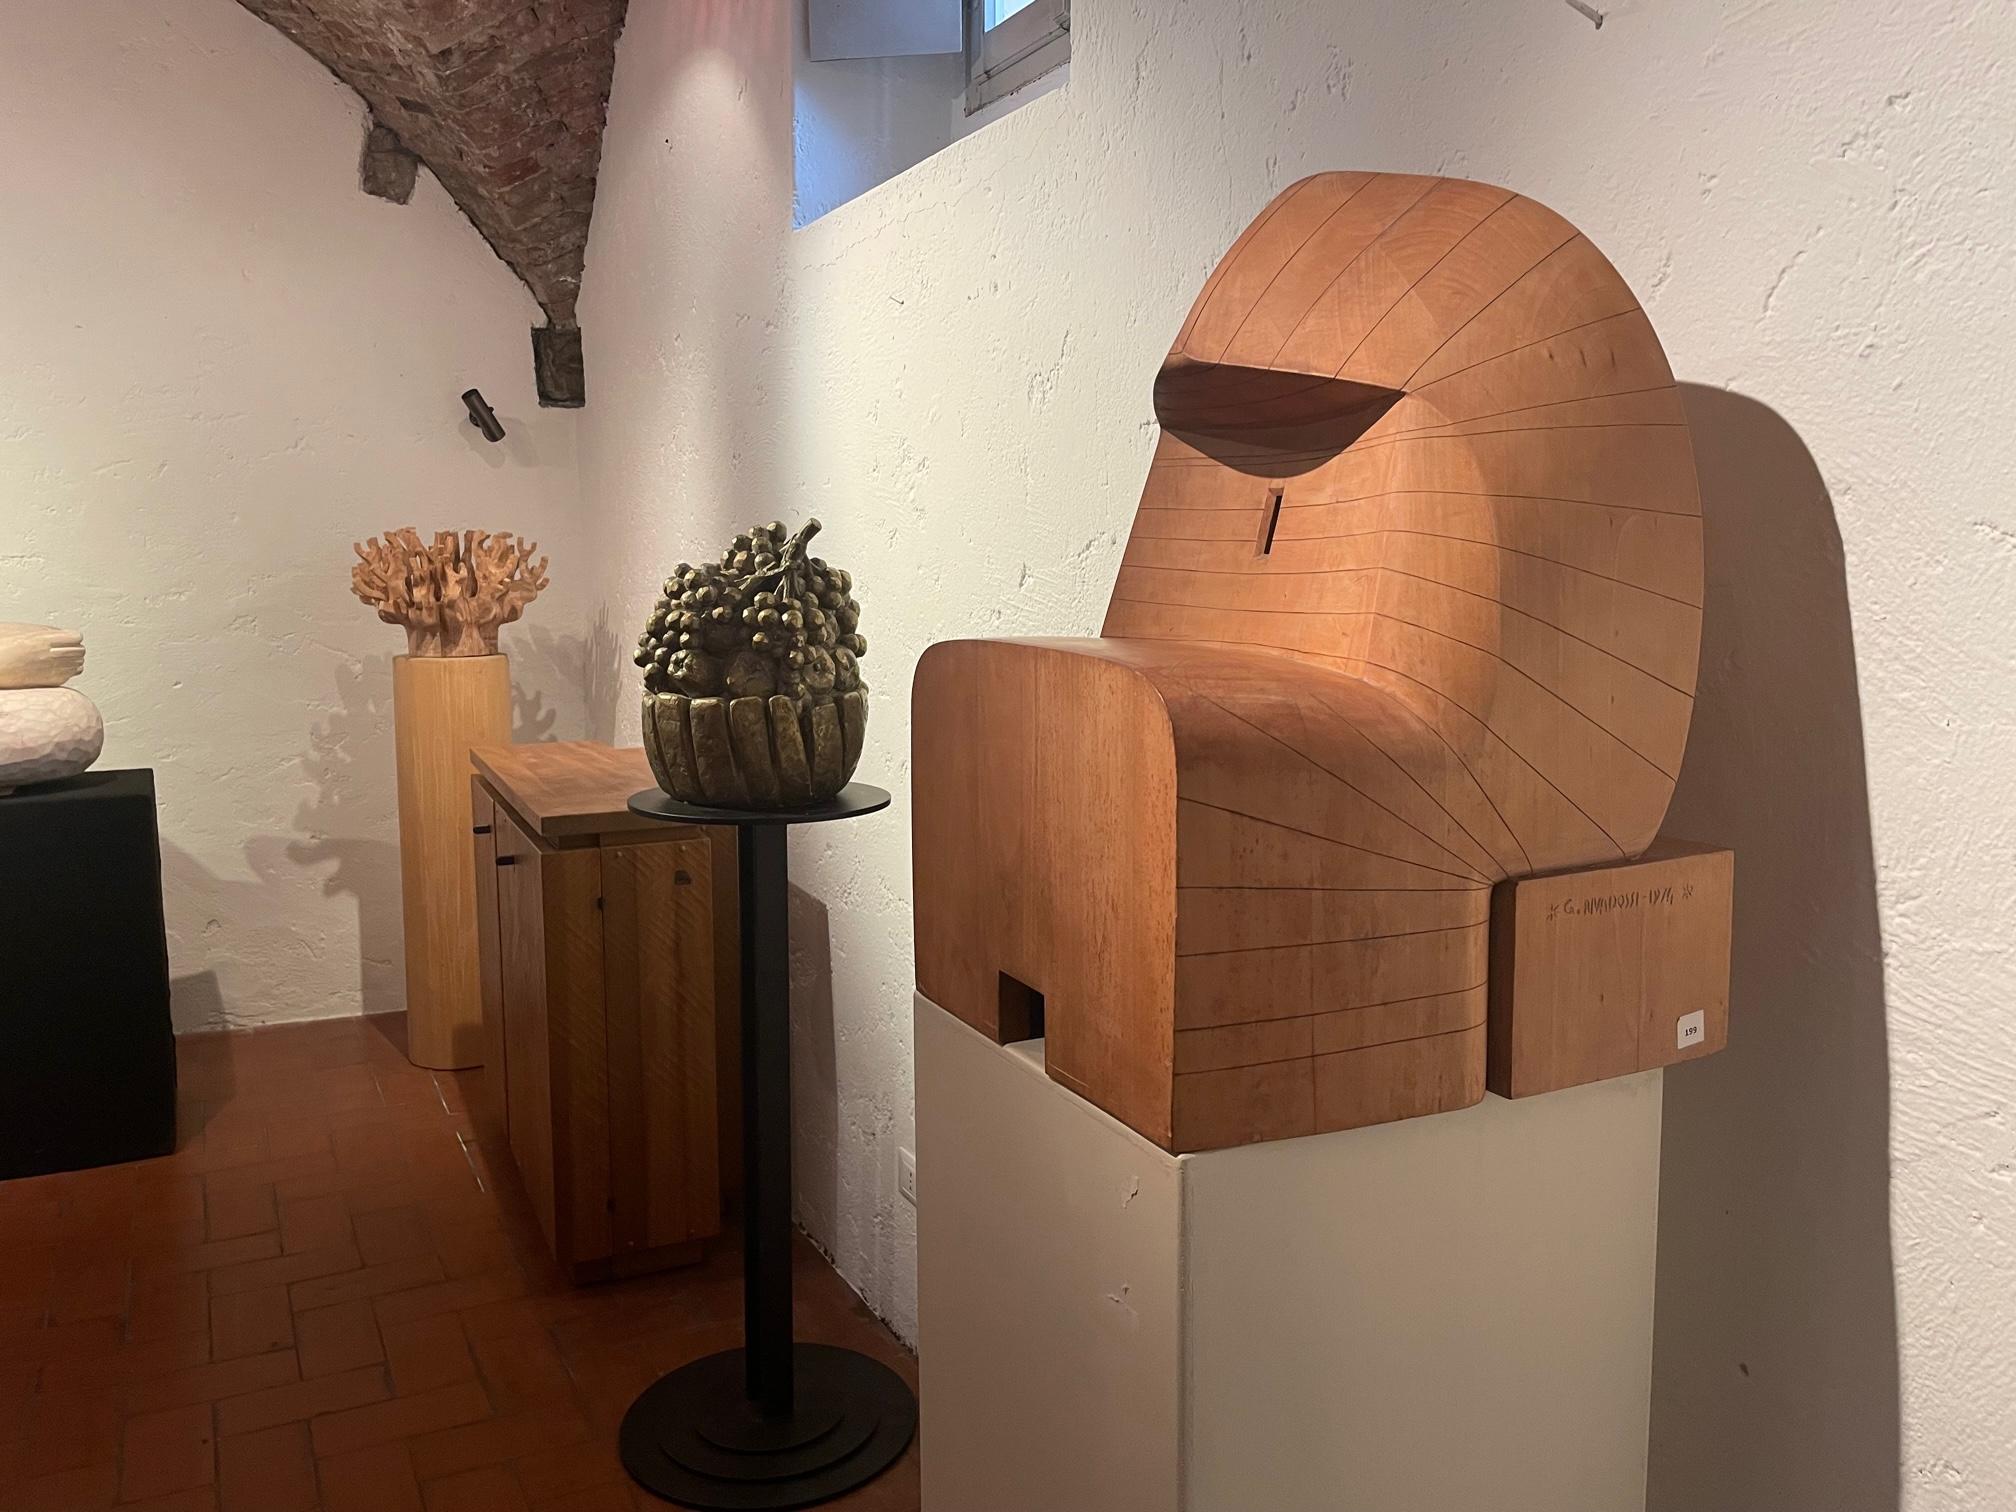 Giuseppe Rivadossi (Nave, 8 juillet 1935)  Hangar, 1974 Sculpture en bois en vente 8